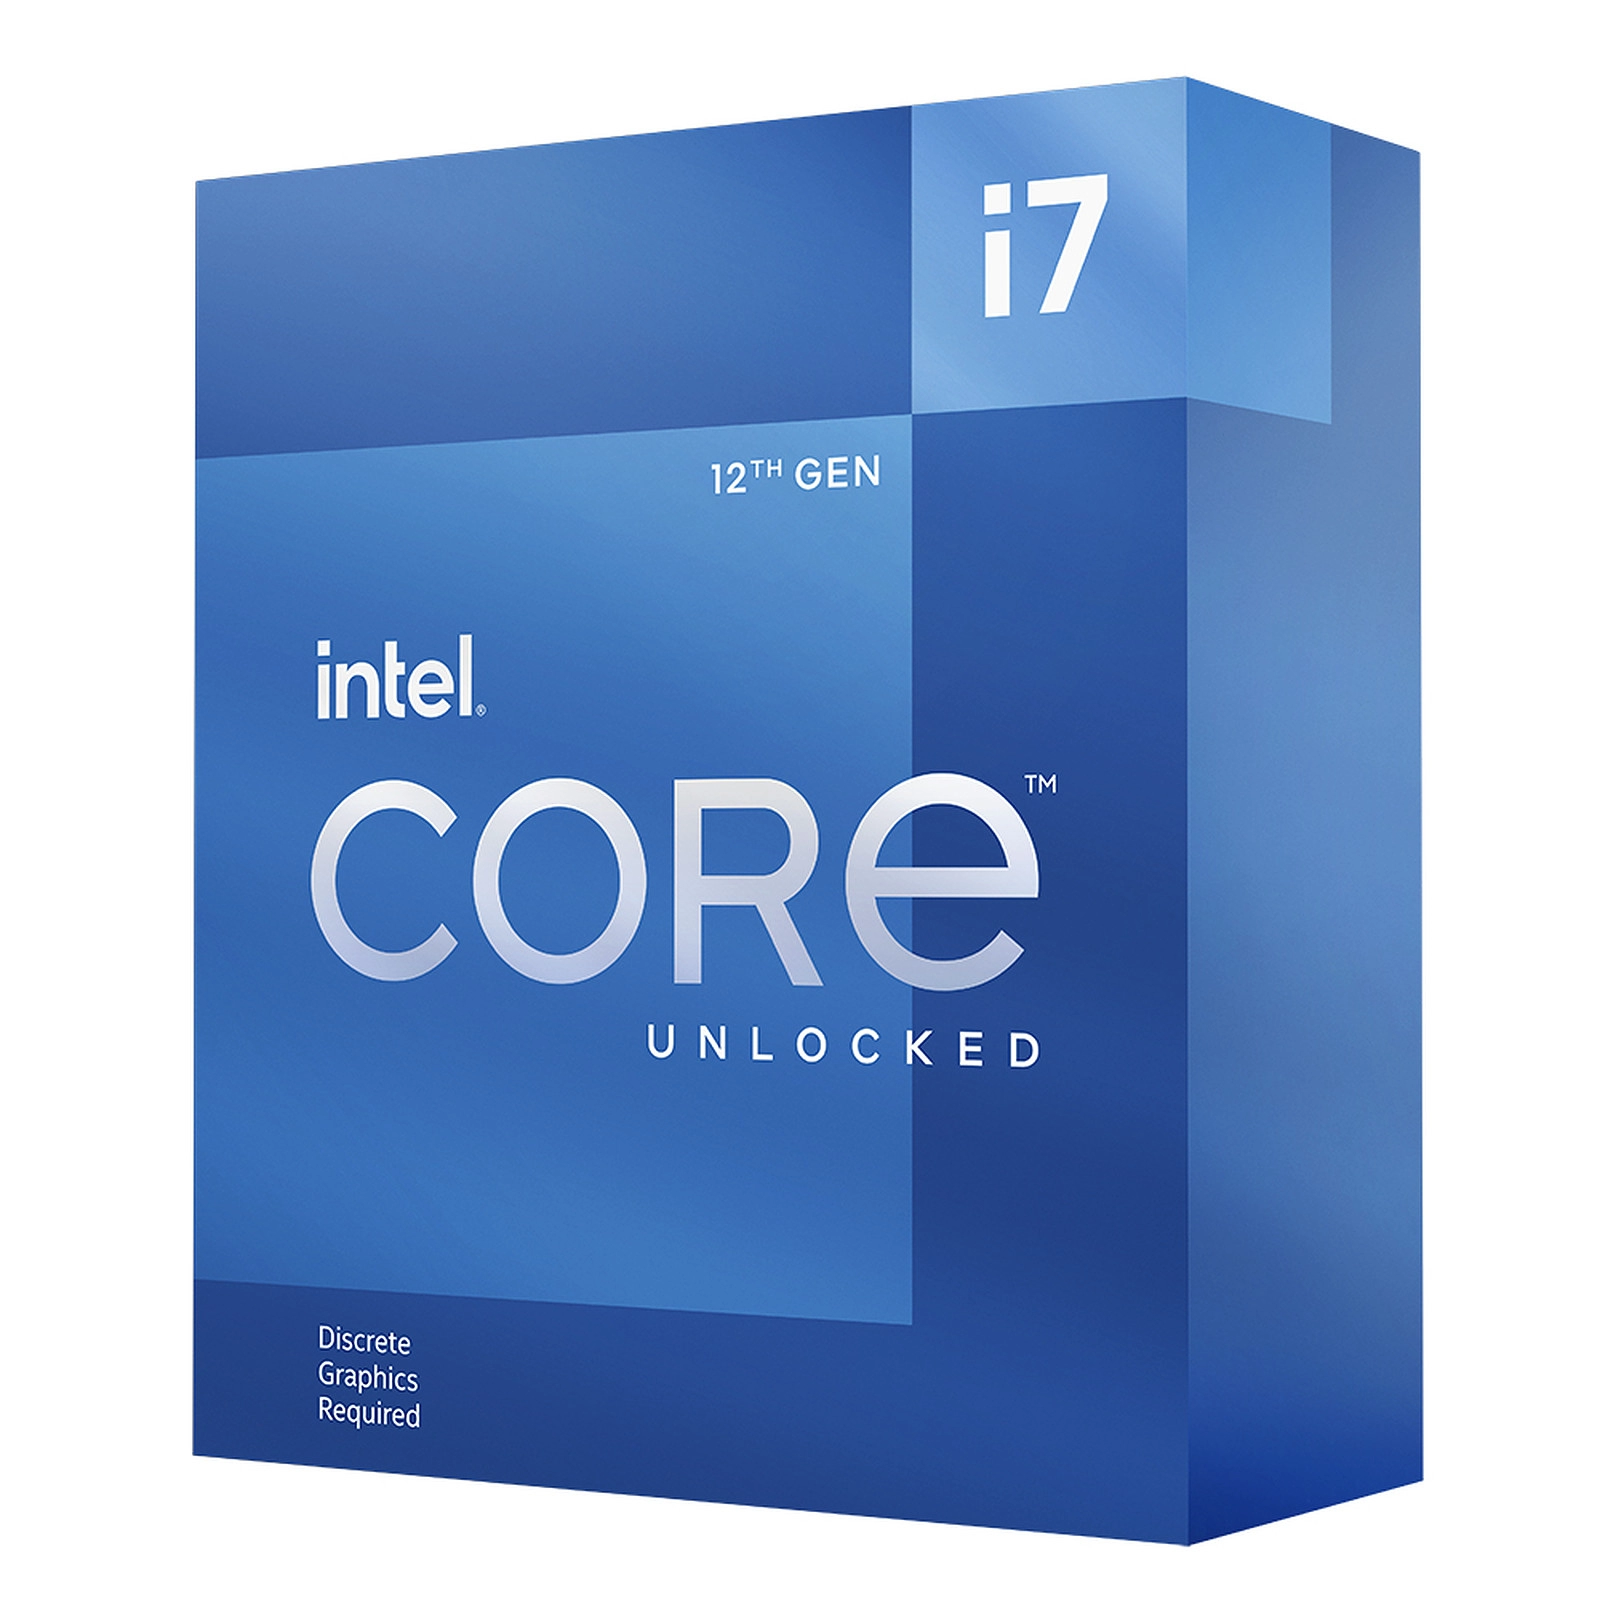 Intel® Core™ i7-12700K, S1700, 3.6-5.0GHz, 12C(8P+4Е) / 20T, 25MB L3 + 12MB L2 Cache, Intel® UHD Graphics 770, 10nm 125W, Unlocked, tray